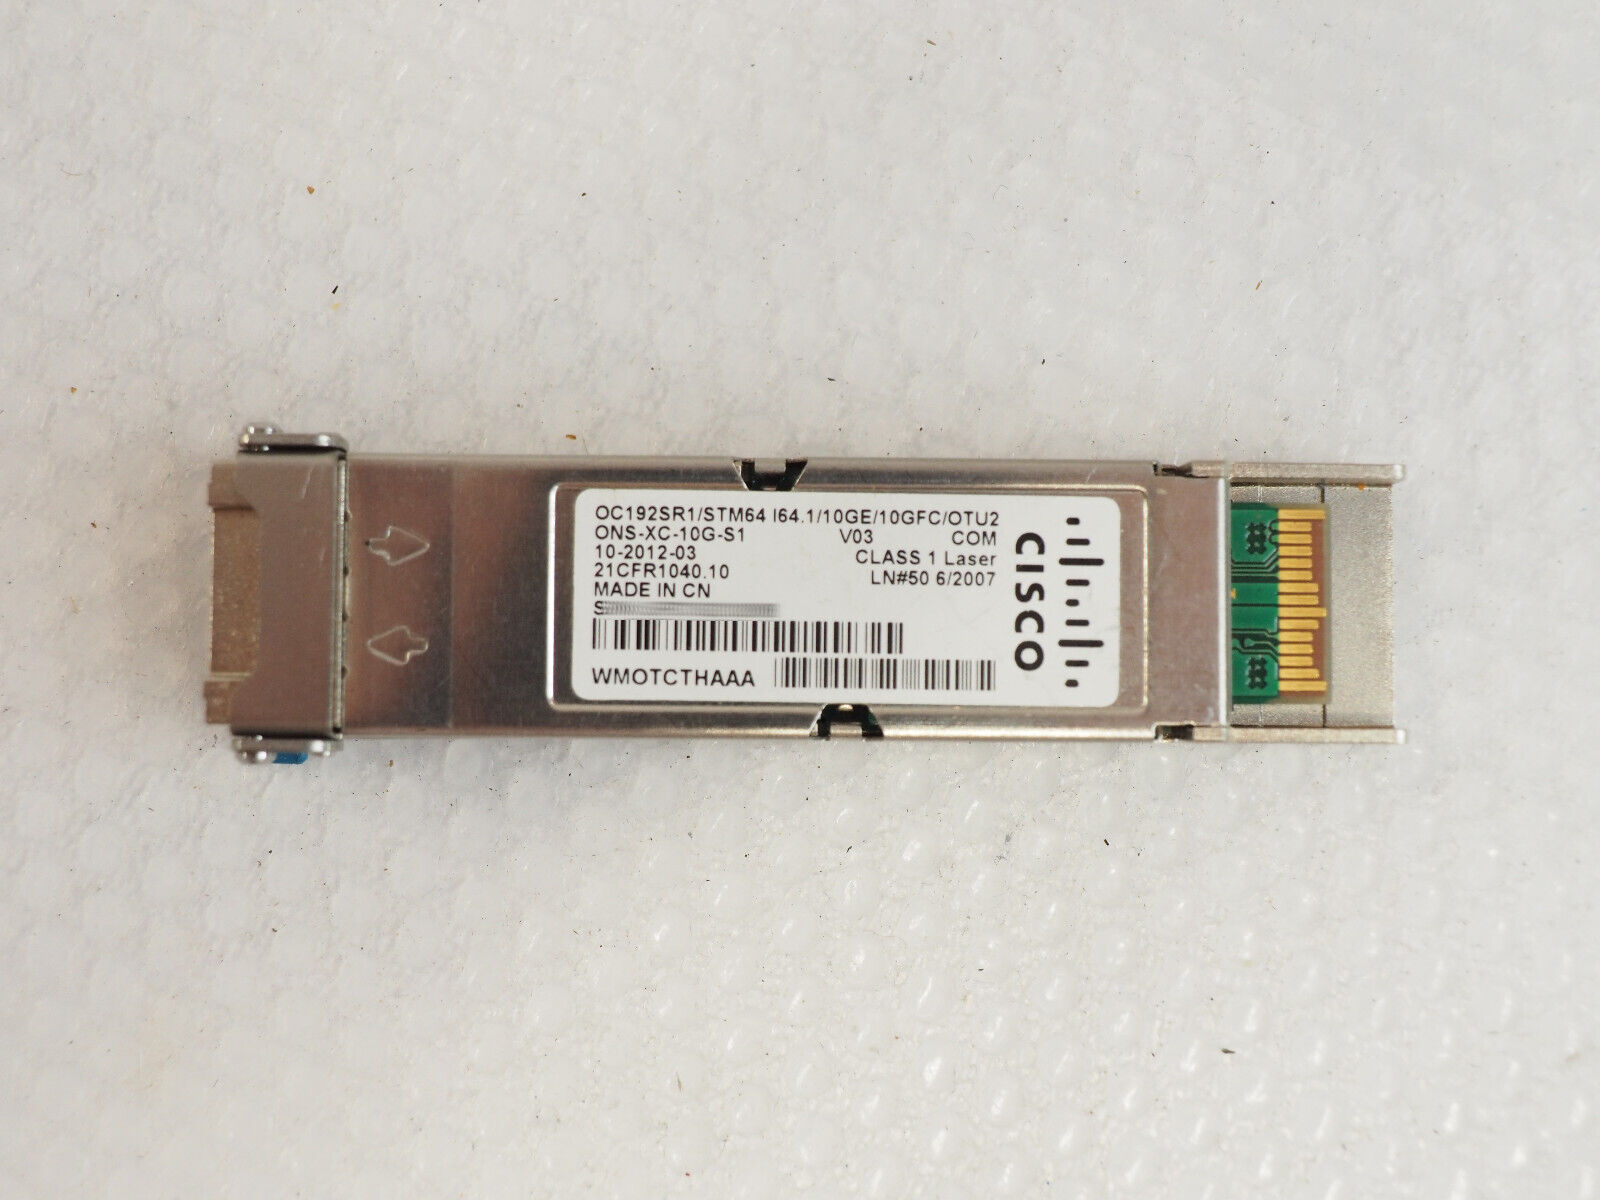 Cisco ONS-XC-10G-S1 P/N 10-2012-03 WMOTCTHAAA Transceiver Module